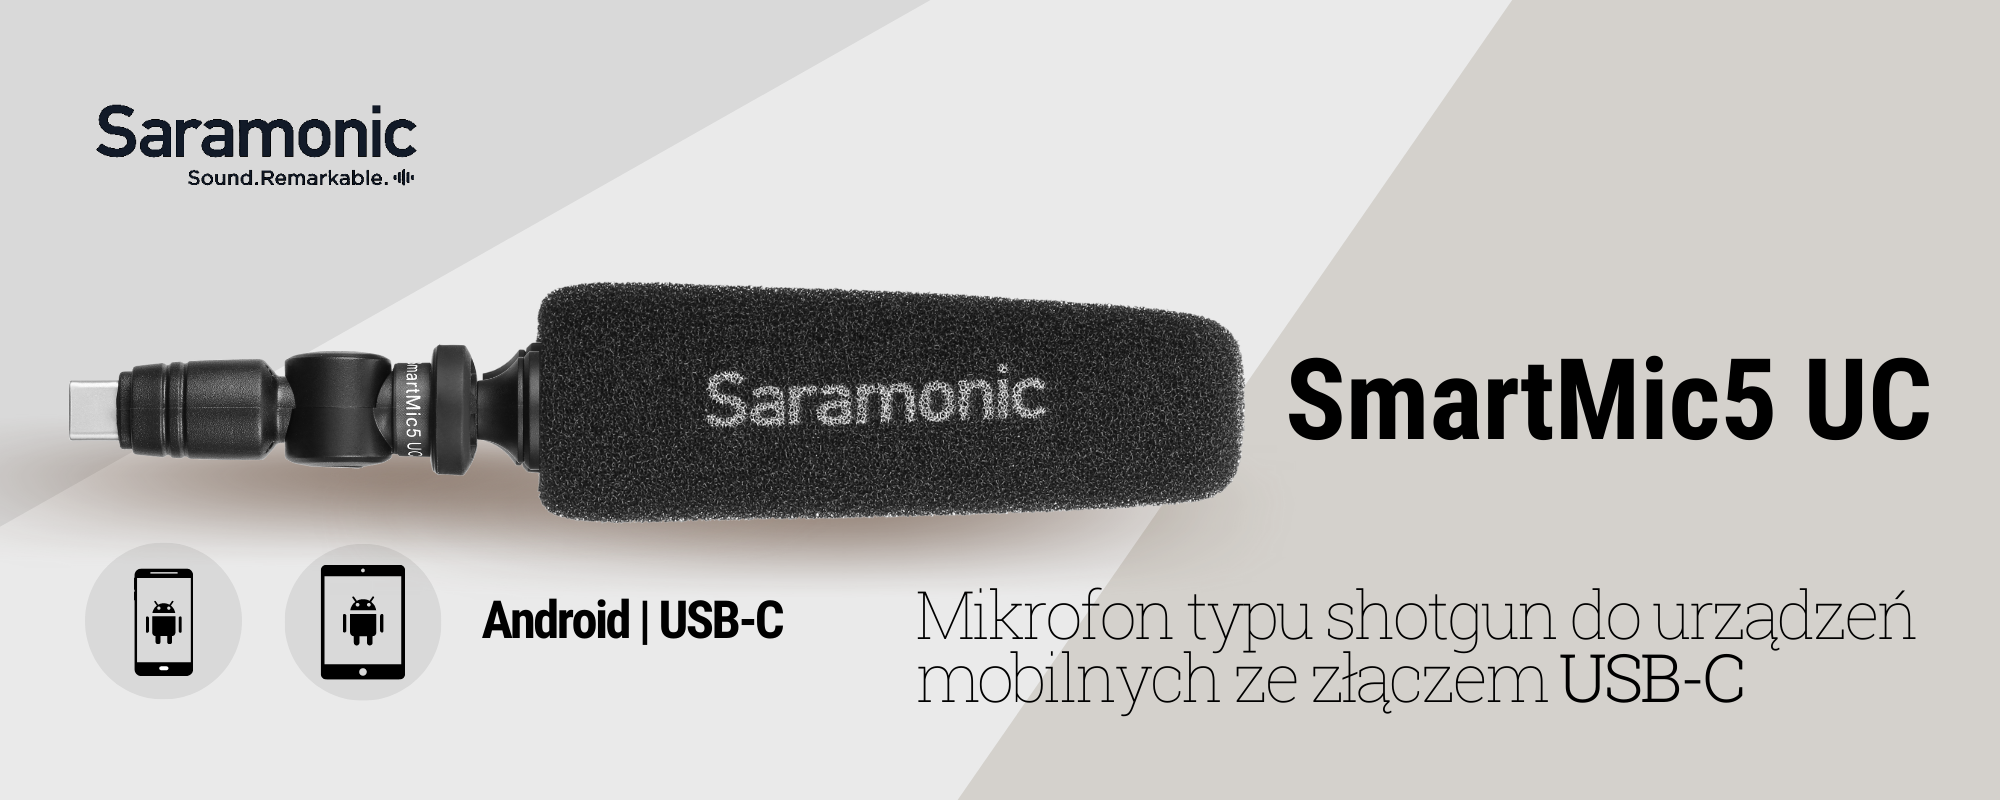 Saramonic SmartMic5 shotgun microphone for mobile devices